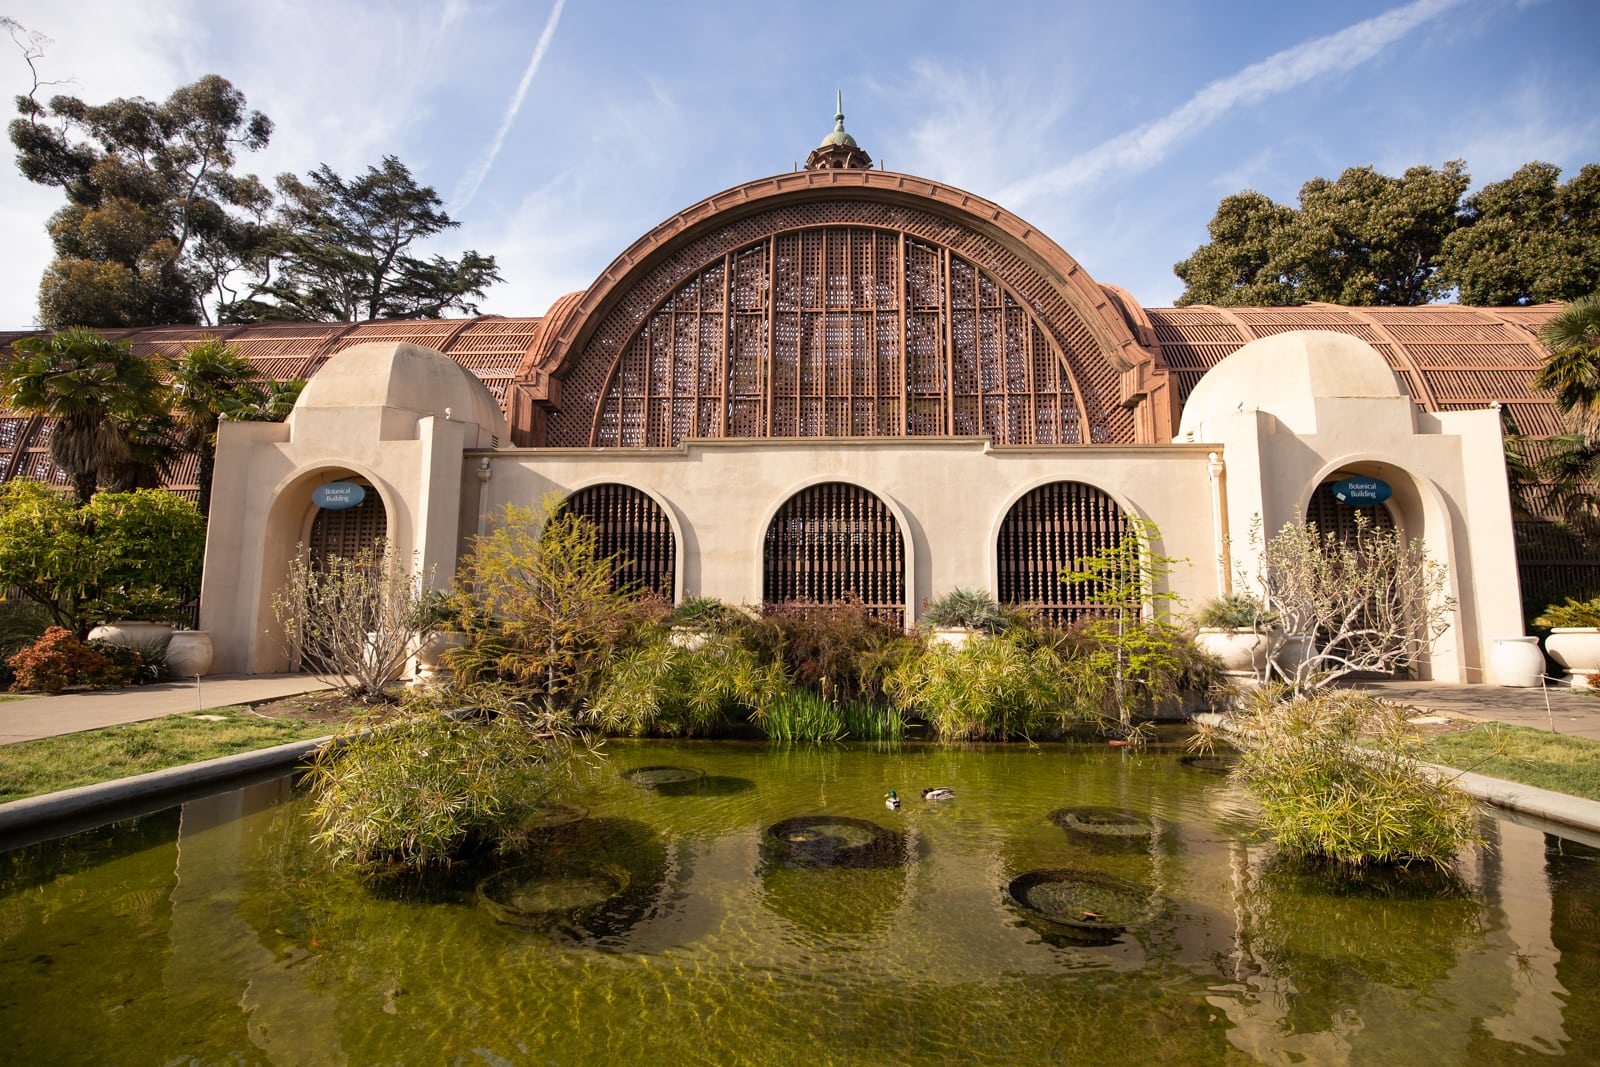 The Botanical Building at Balboa Park